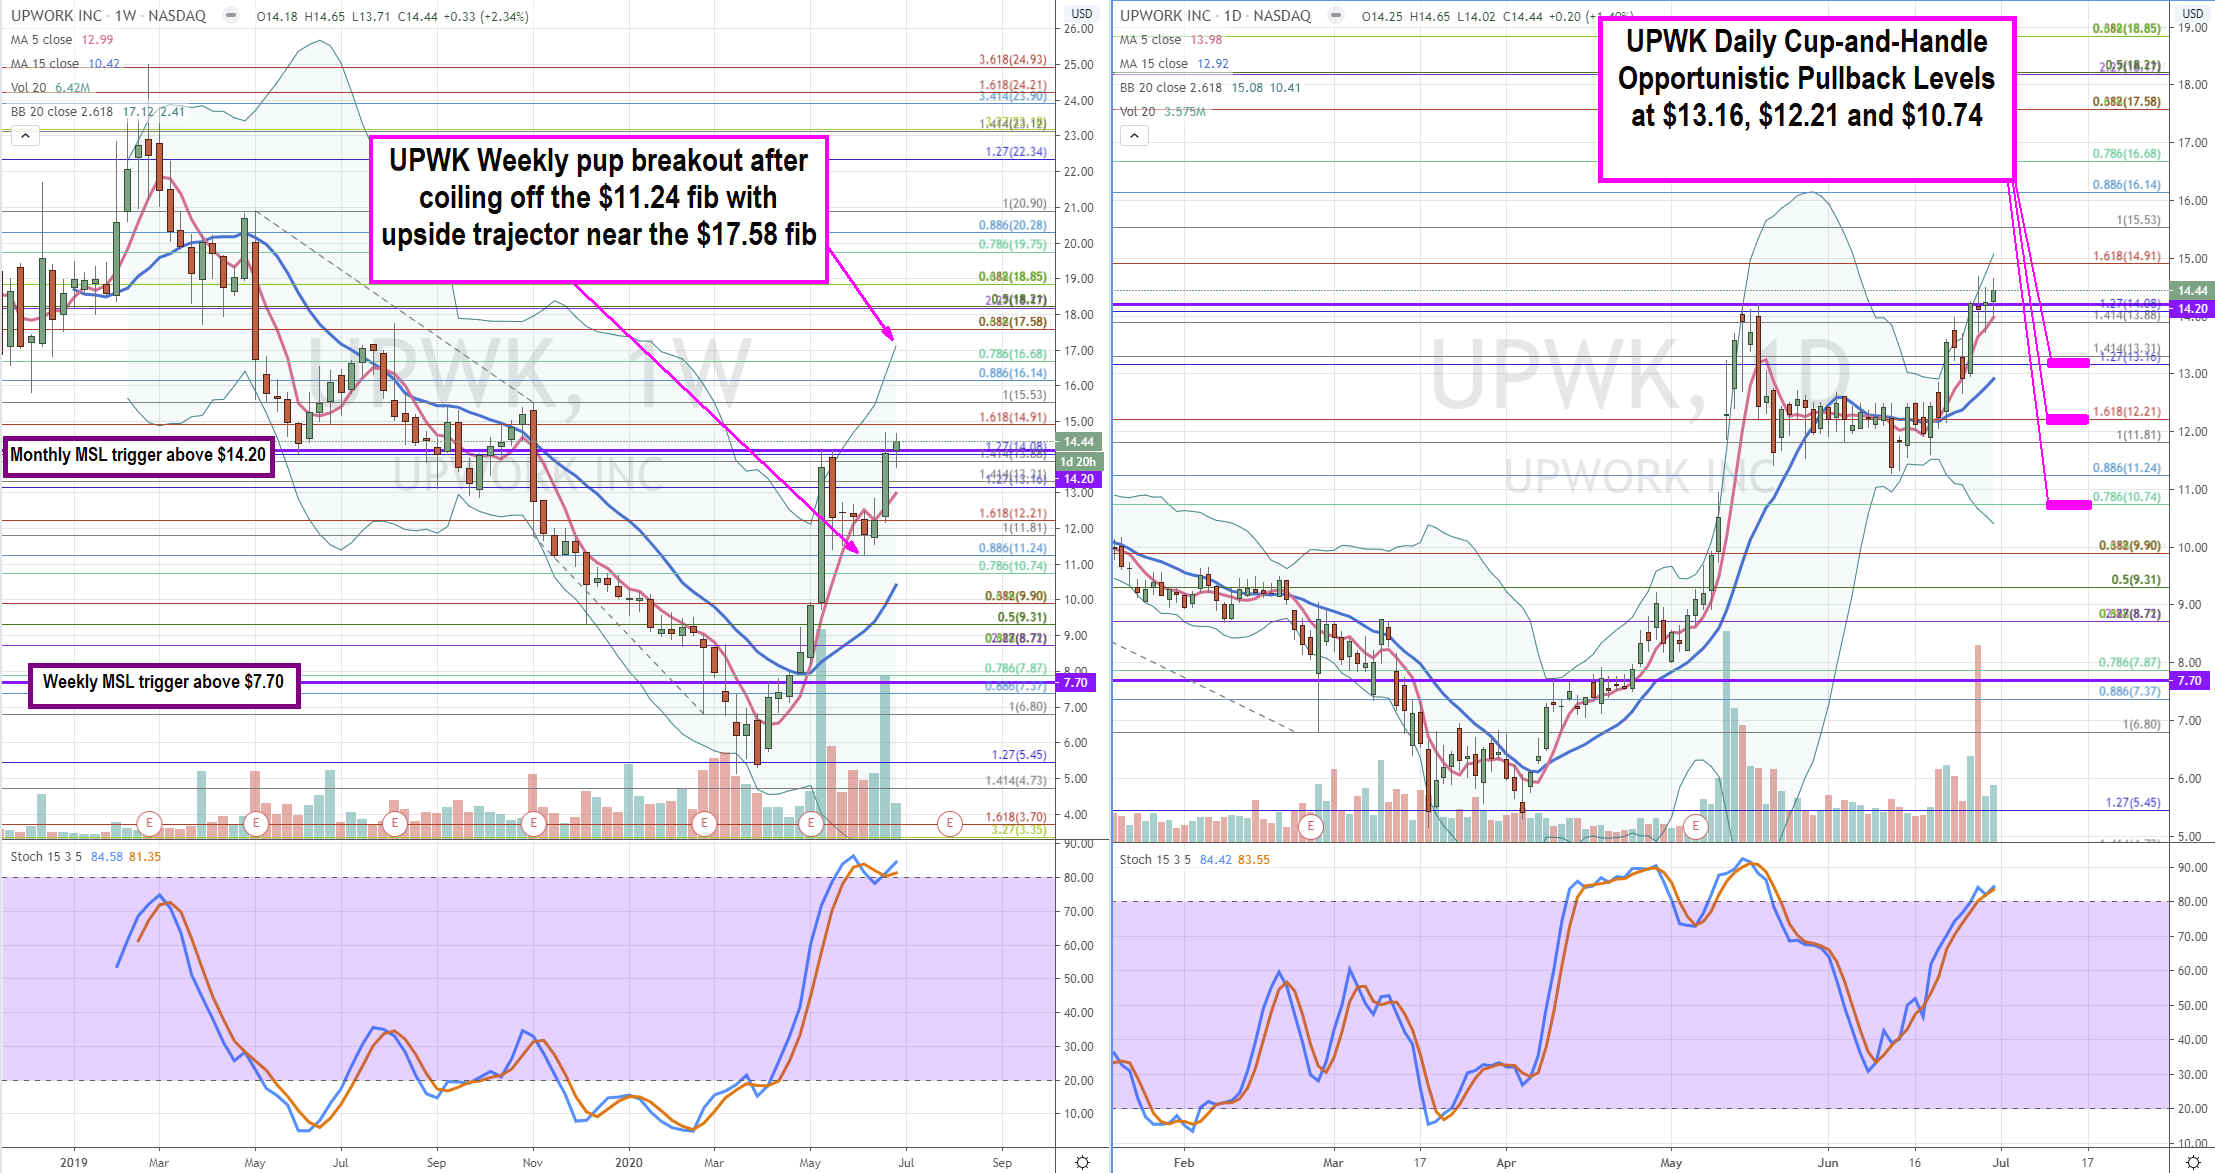 Upwork (NASDAQ: UPWK) Stock is an Overlooked Pandemic Play